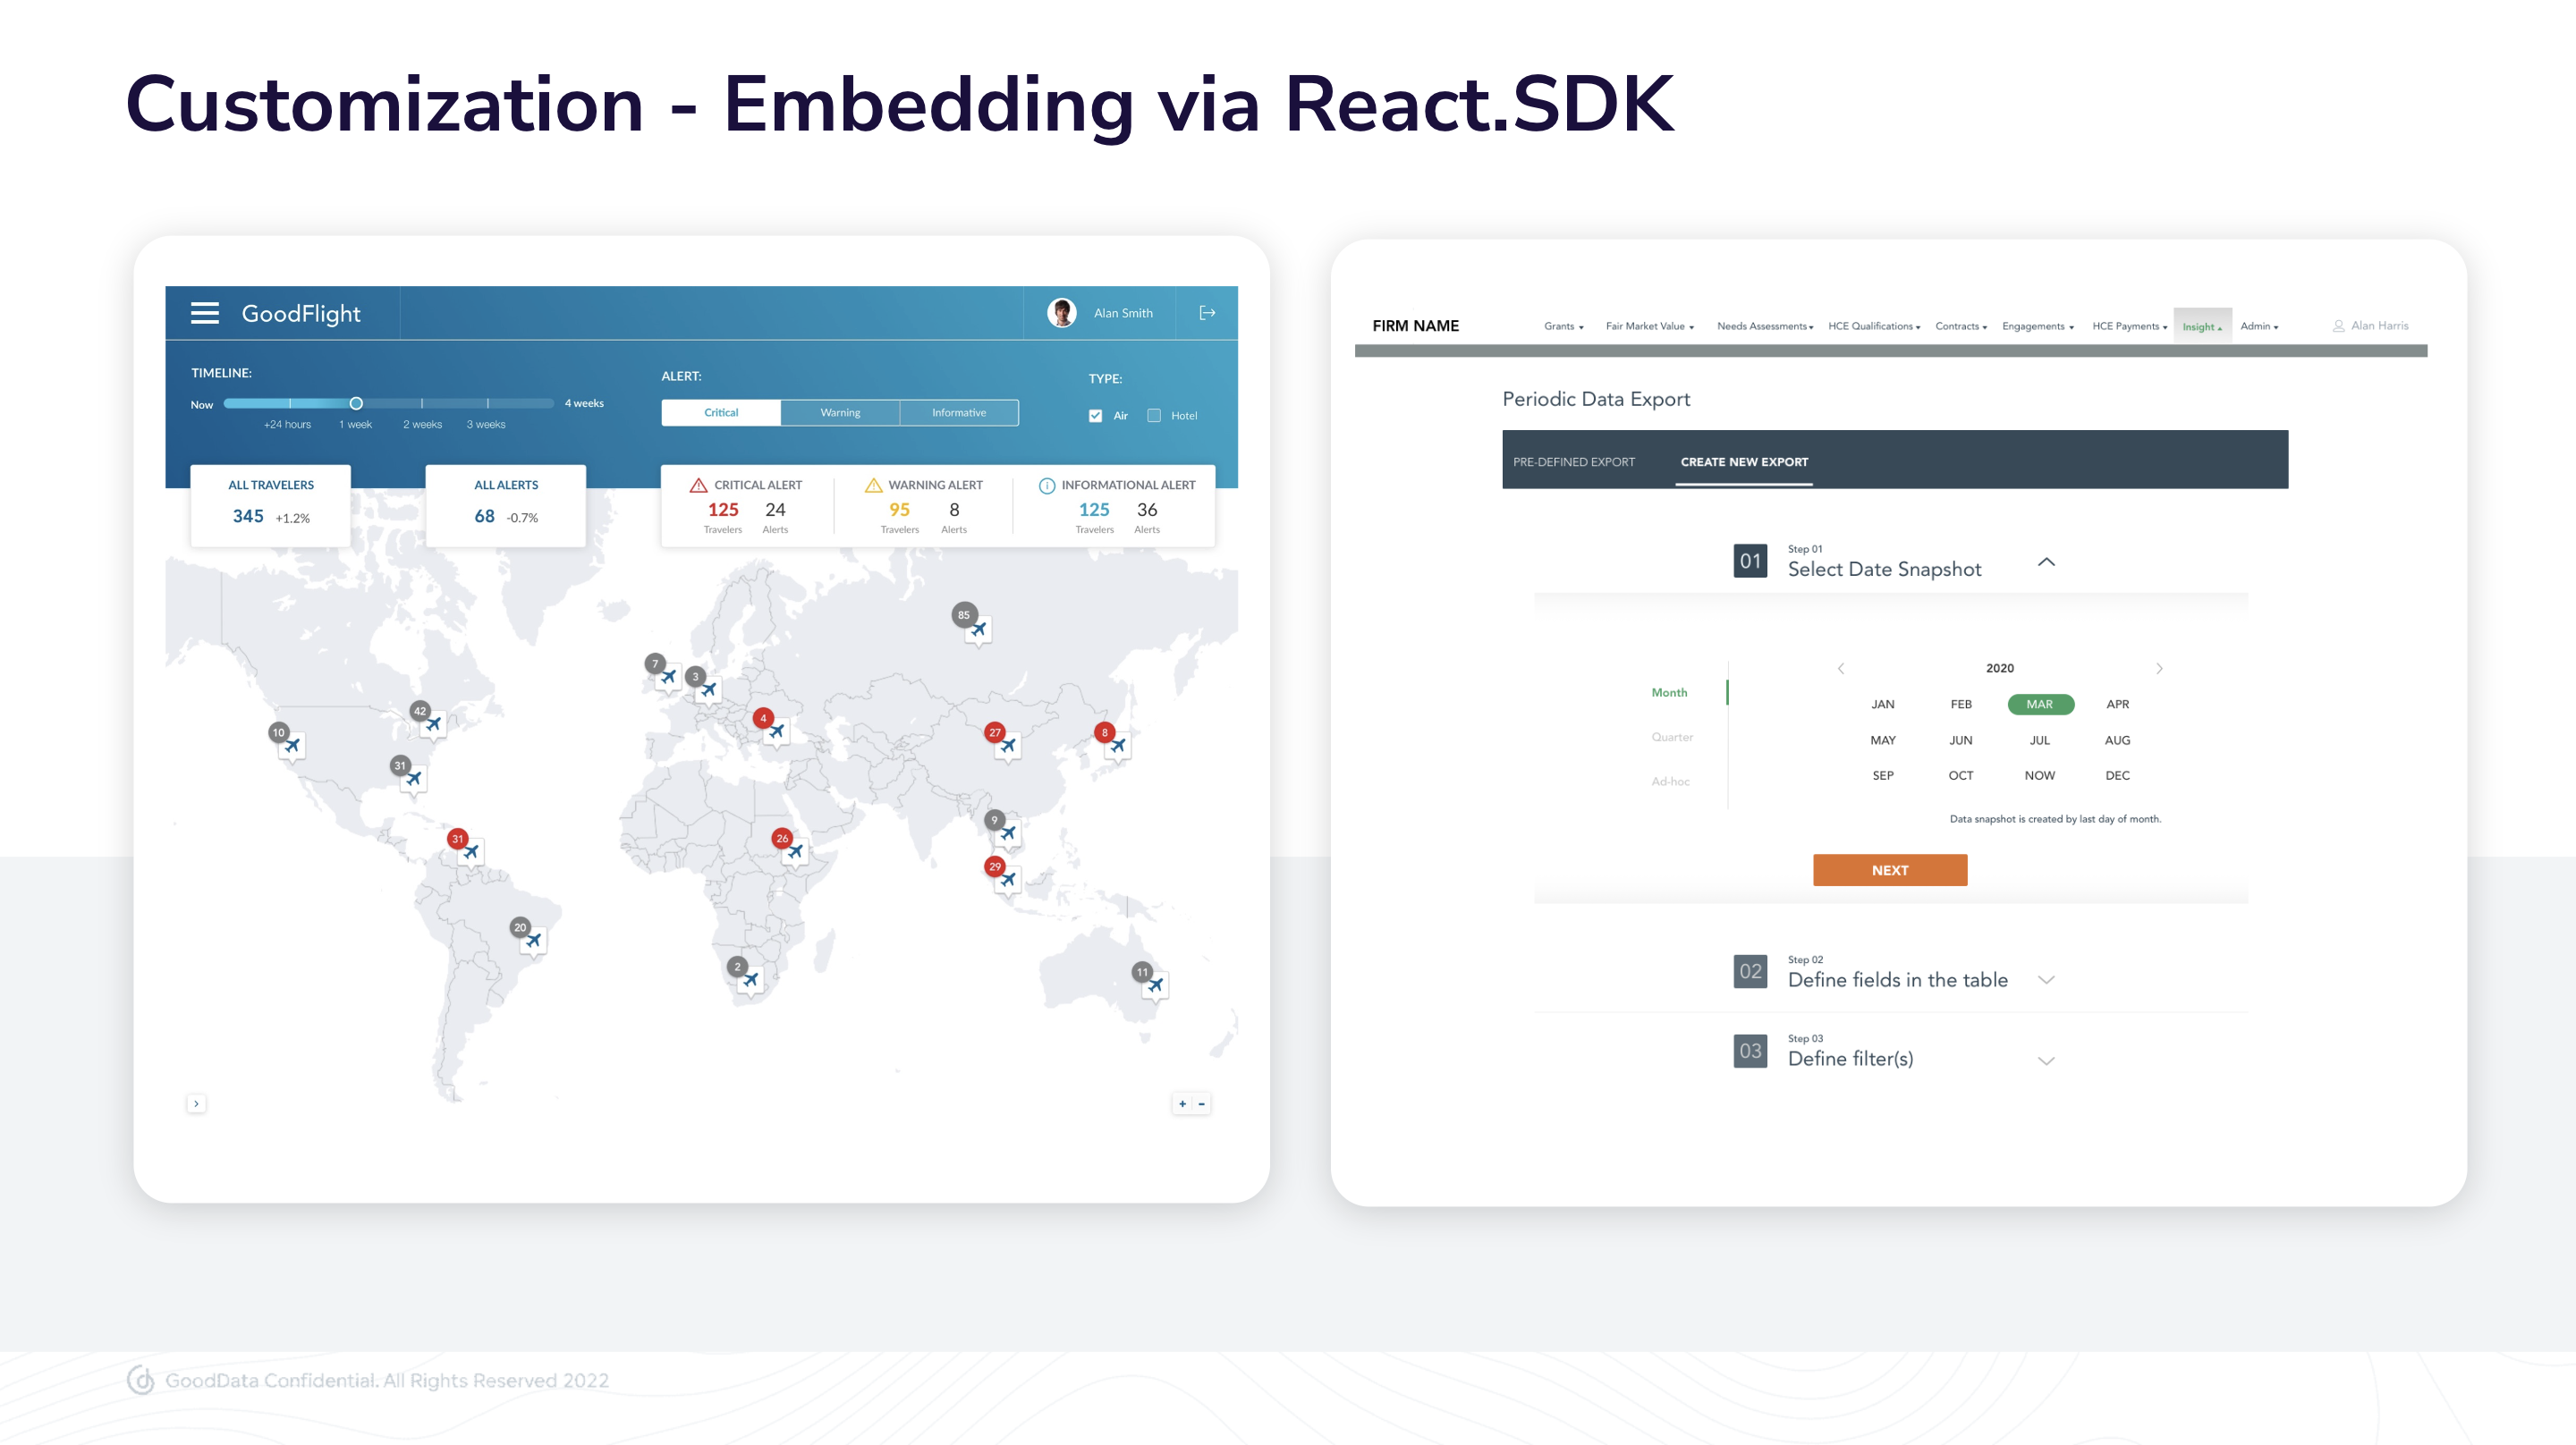 Customization and embedding via React SDK